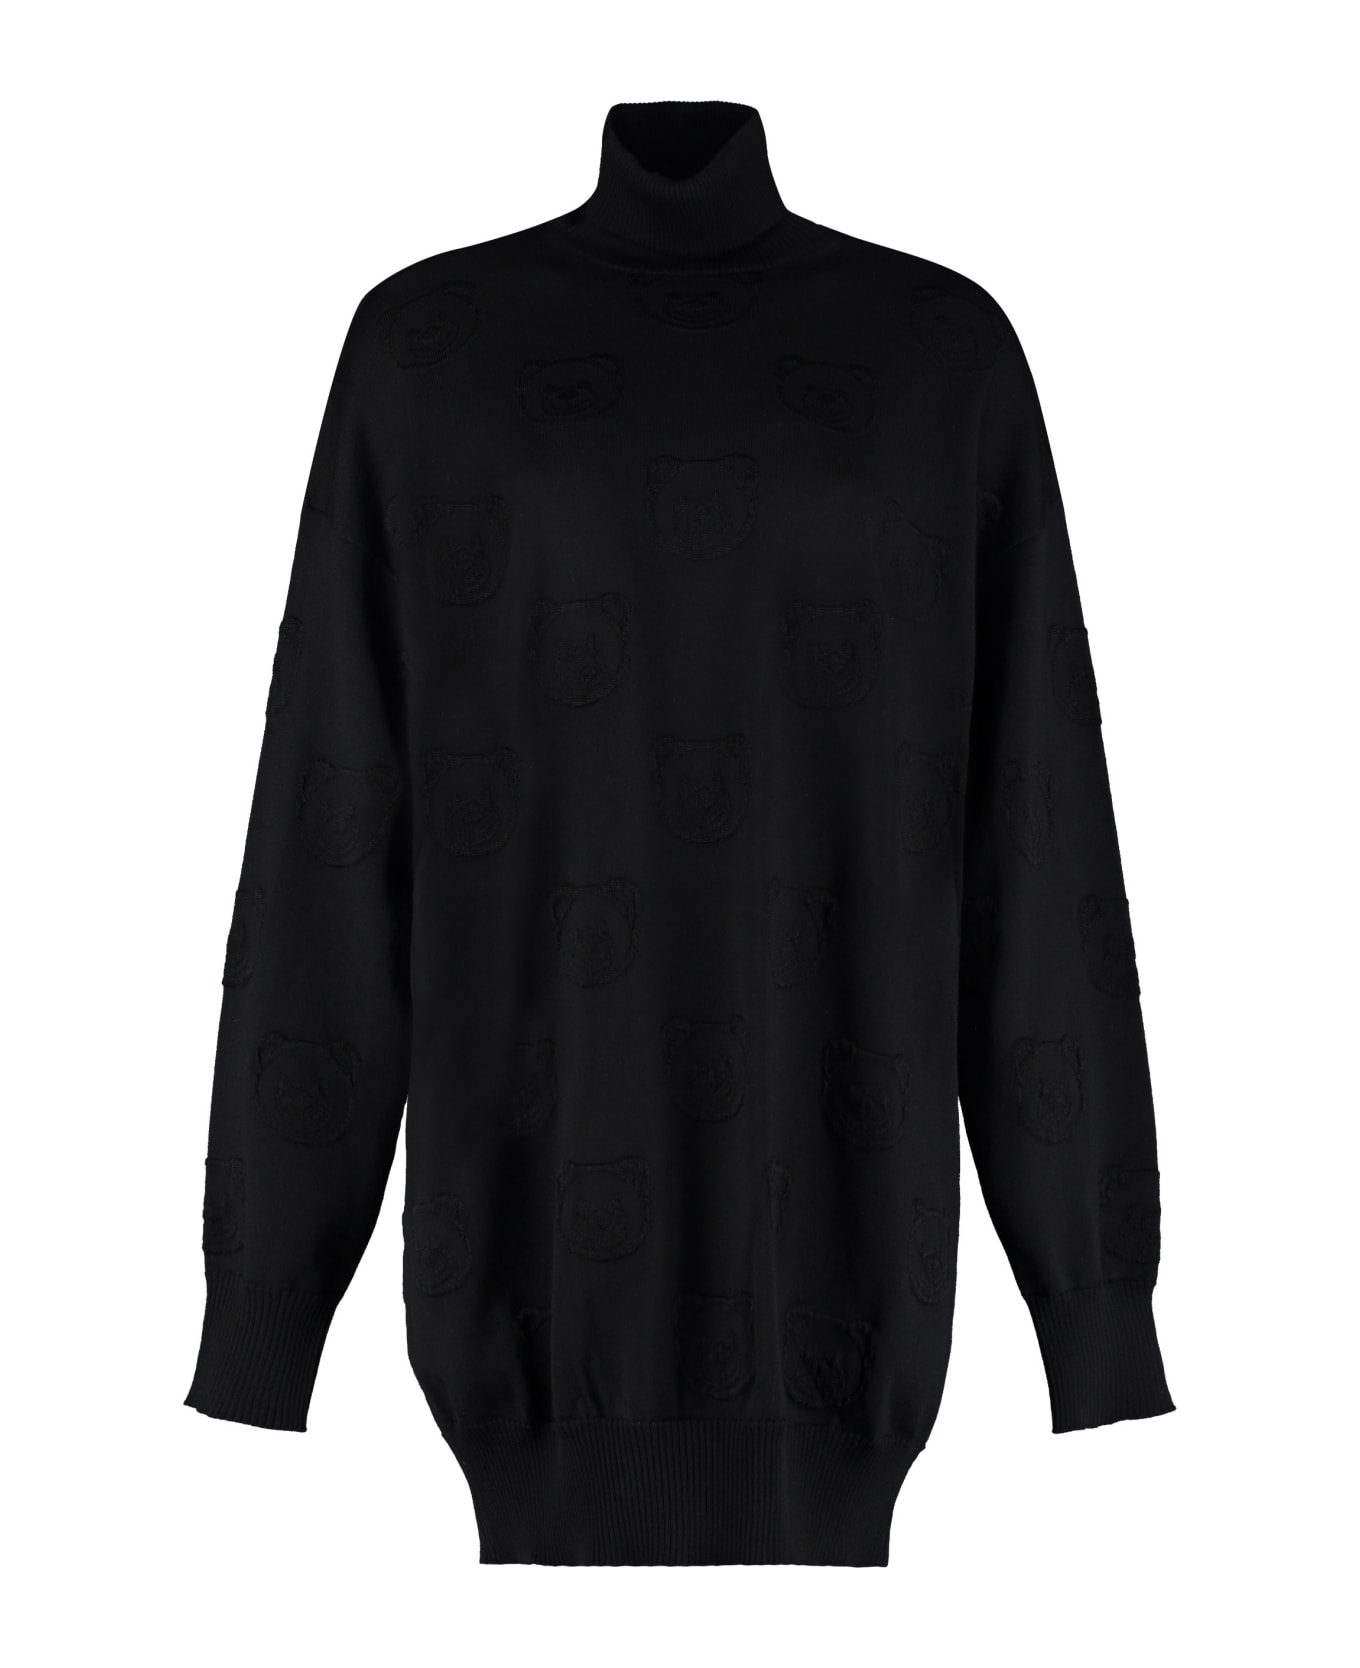 Moschino Jacquard Sweater Dress - black